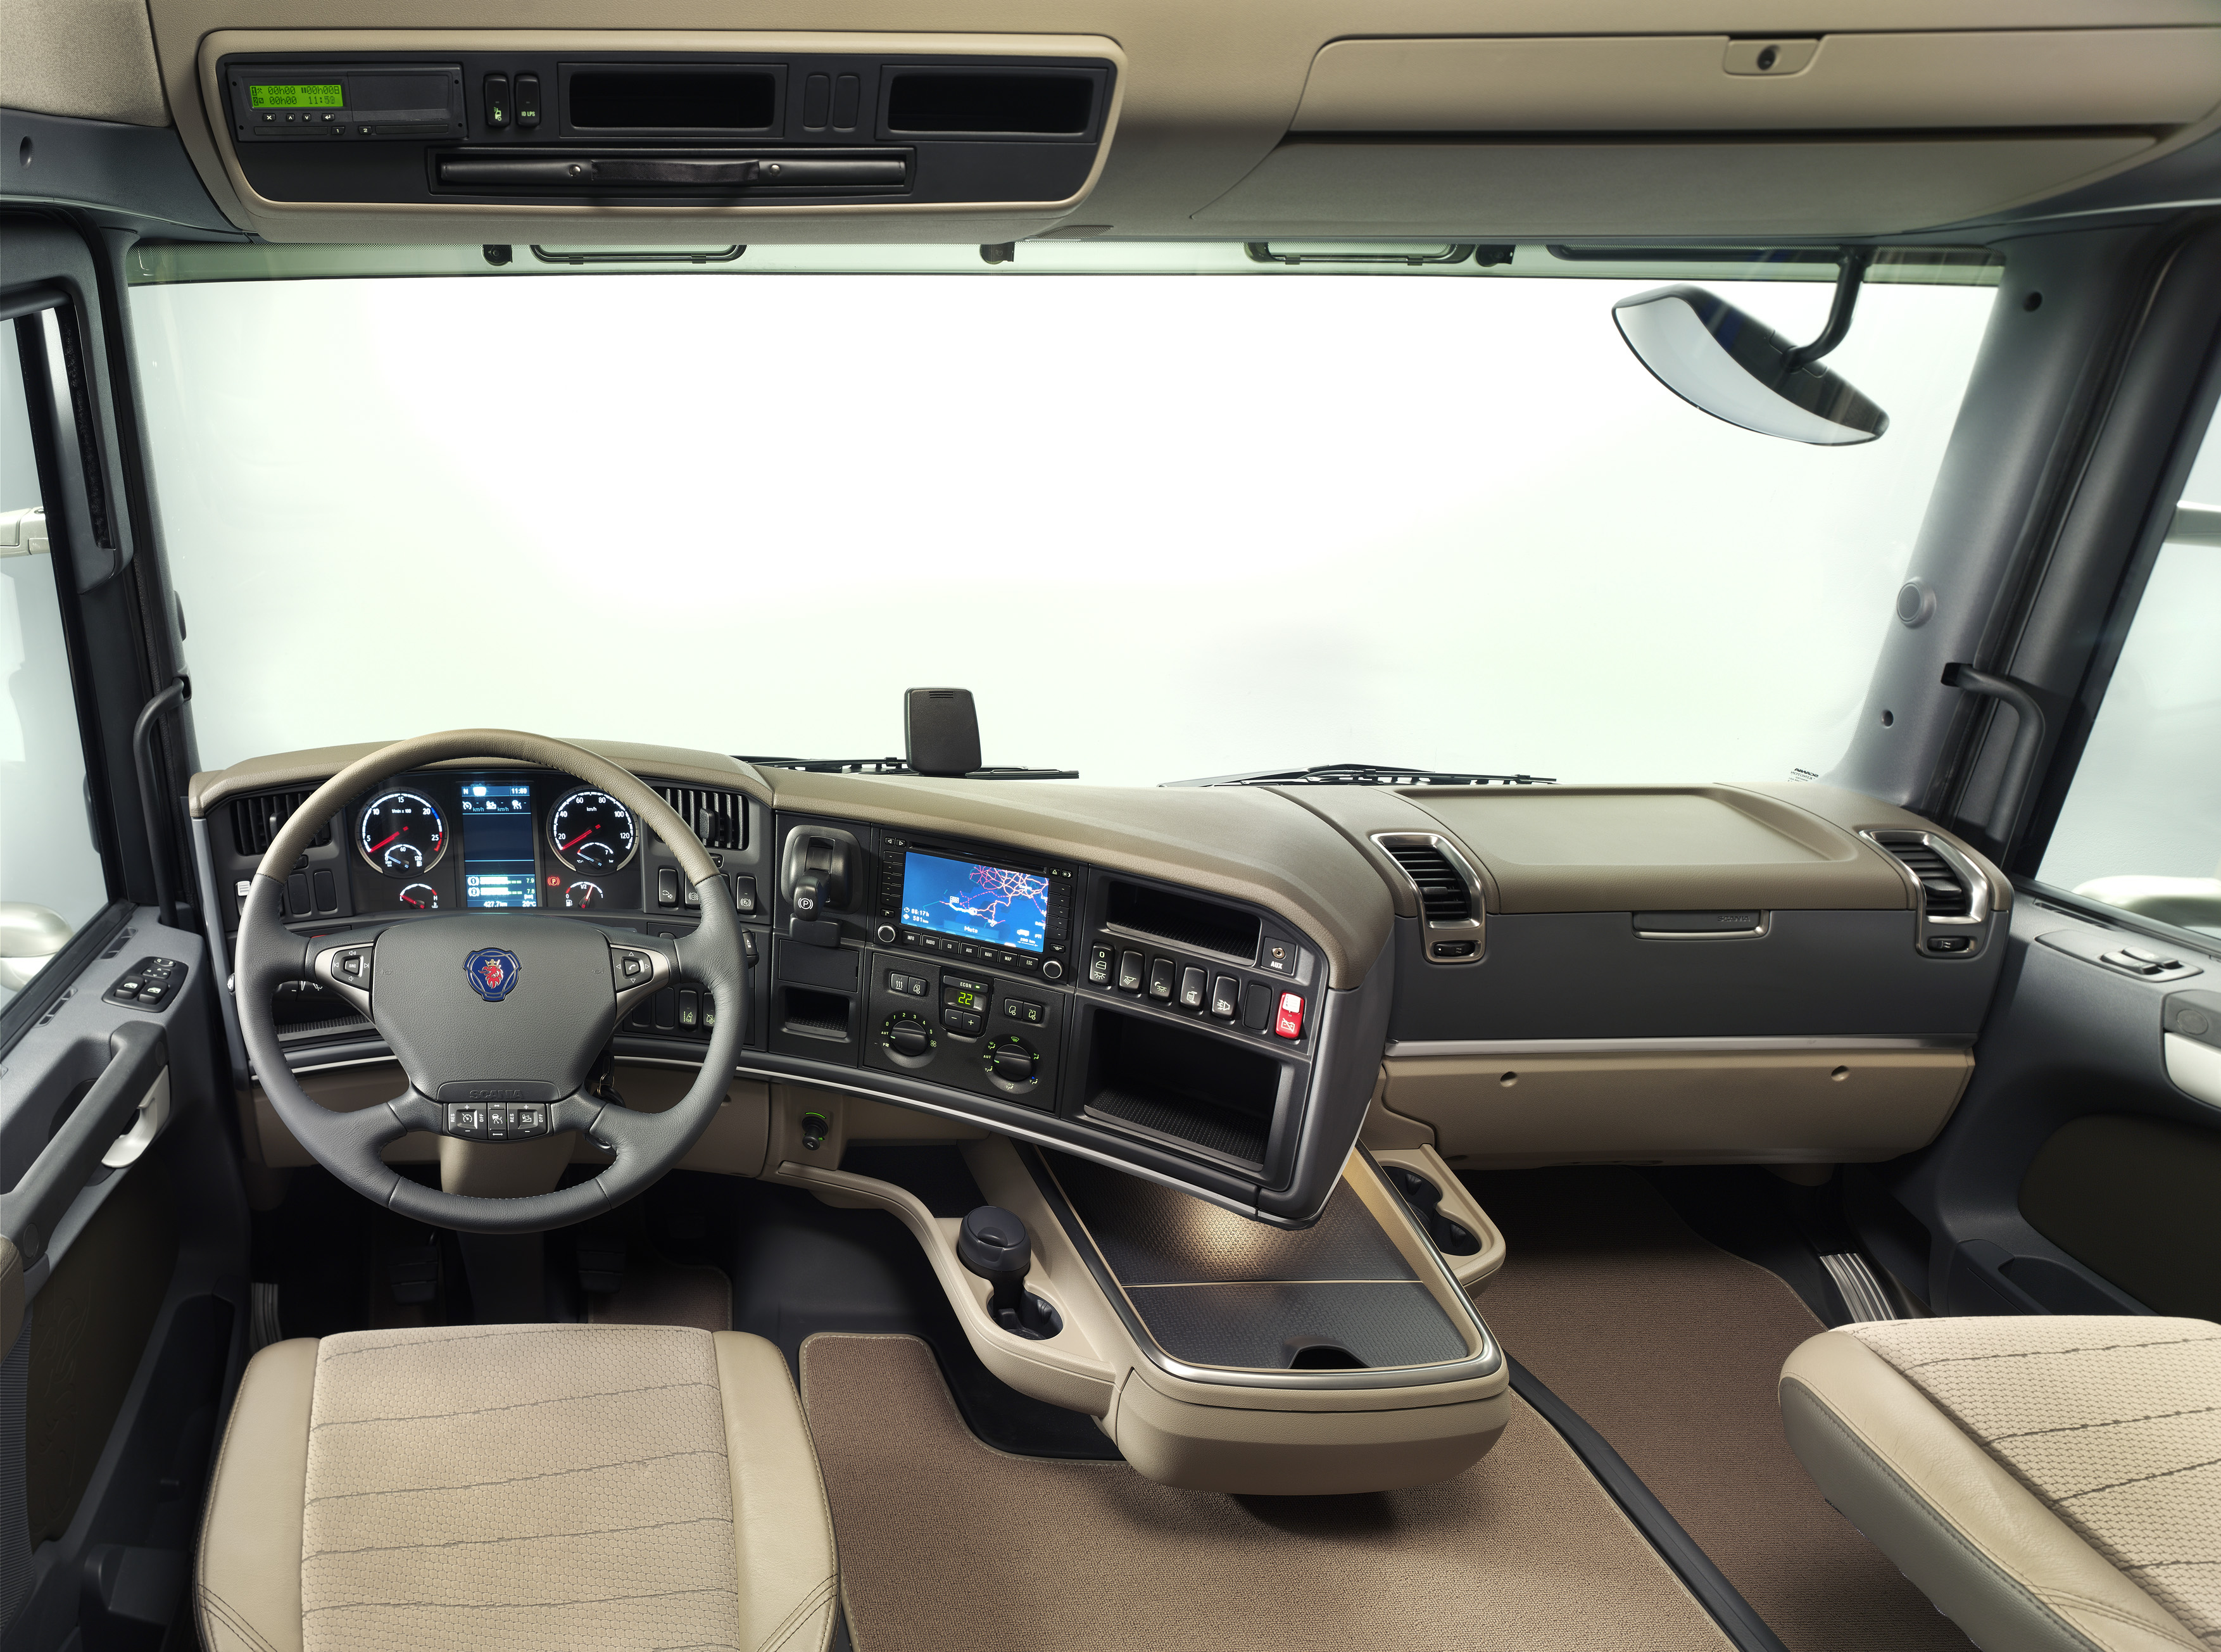 Big Rig Interior Scania R730 Truck 3508x2609